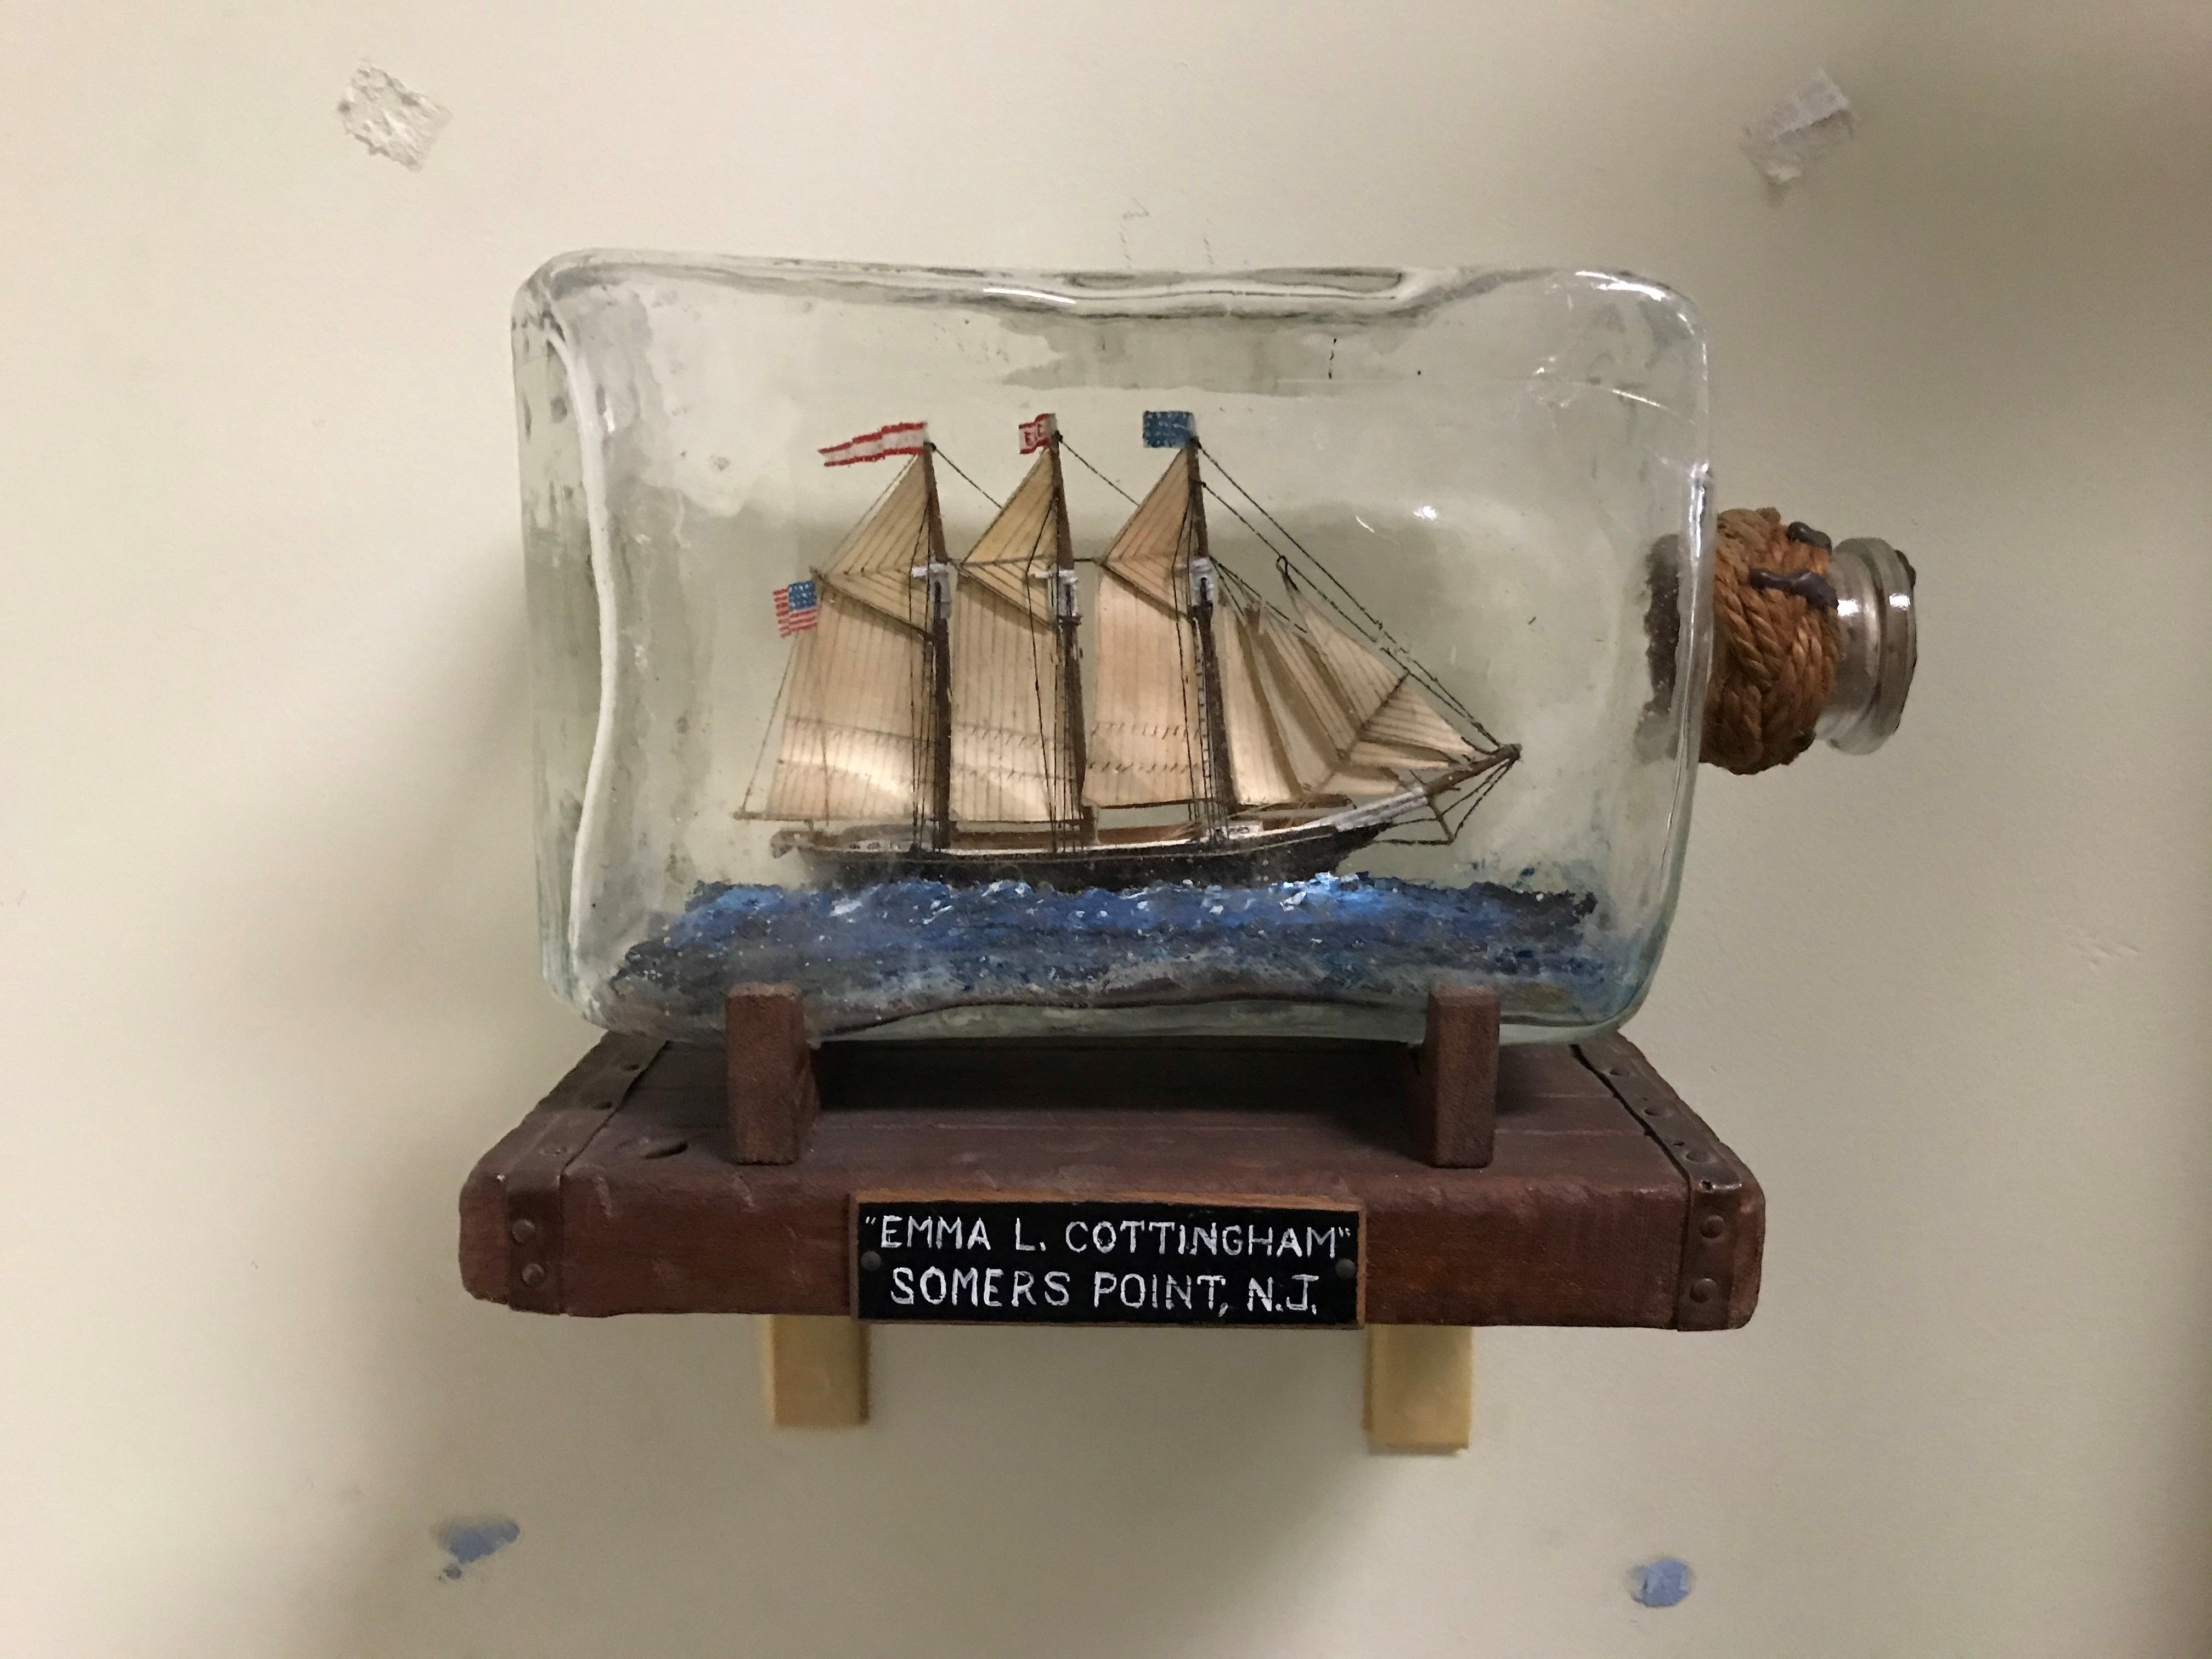 small ship model inside a glass bottle, mounted on a shelf. Label indicates Emma L. Cottingham, Somers Point, NJ.